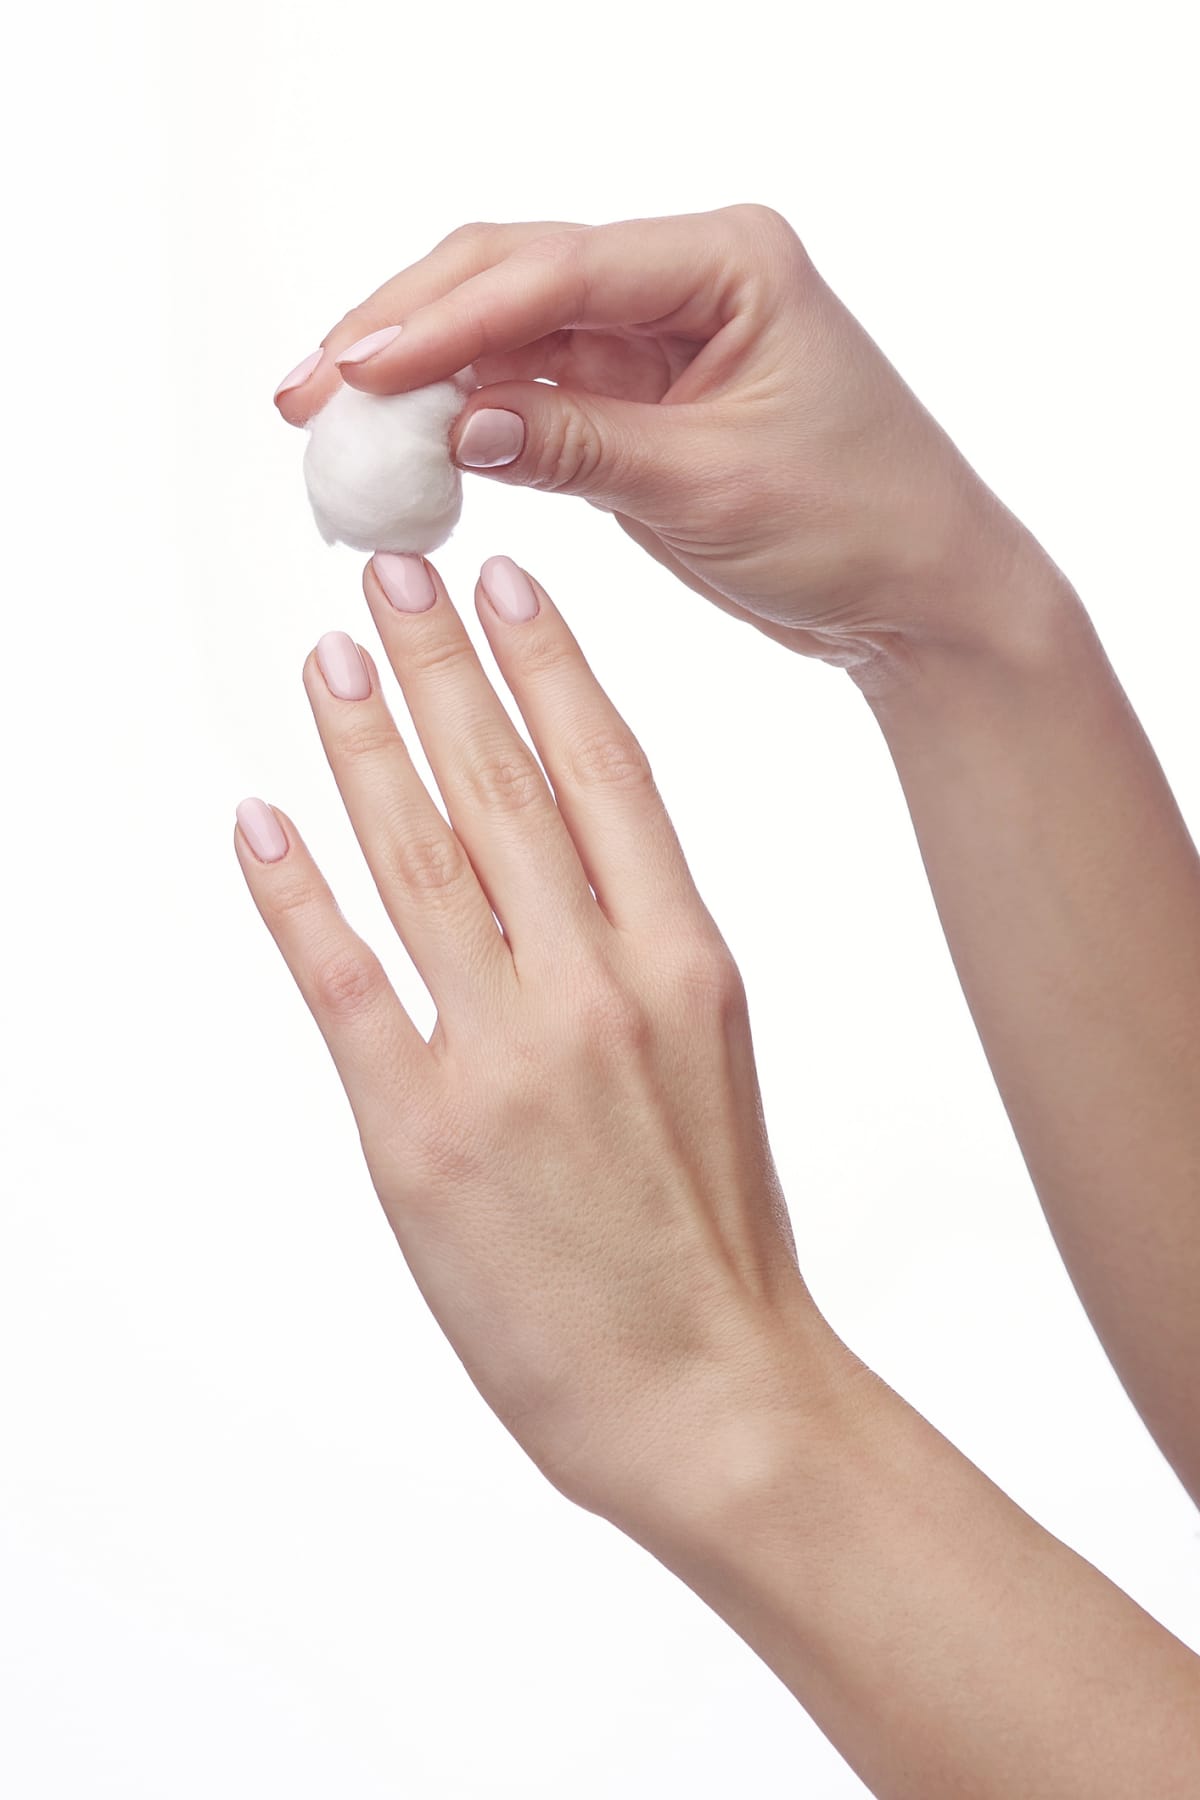 How To Remove SNS Nails At Home | Diamond Nail Supplies